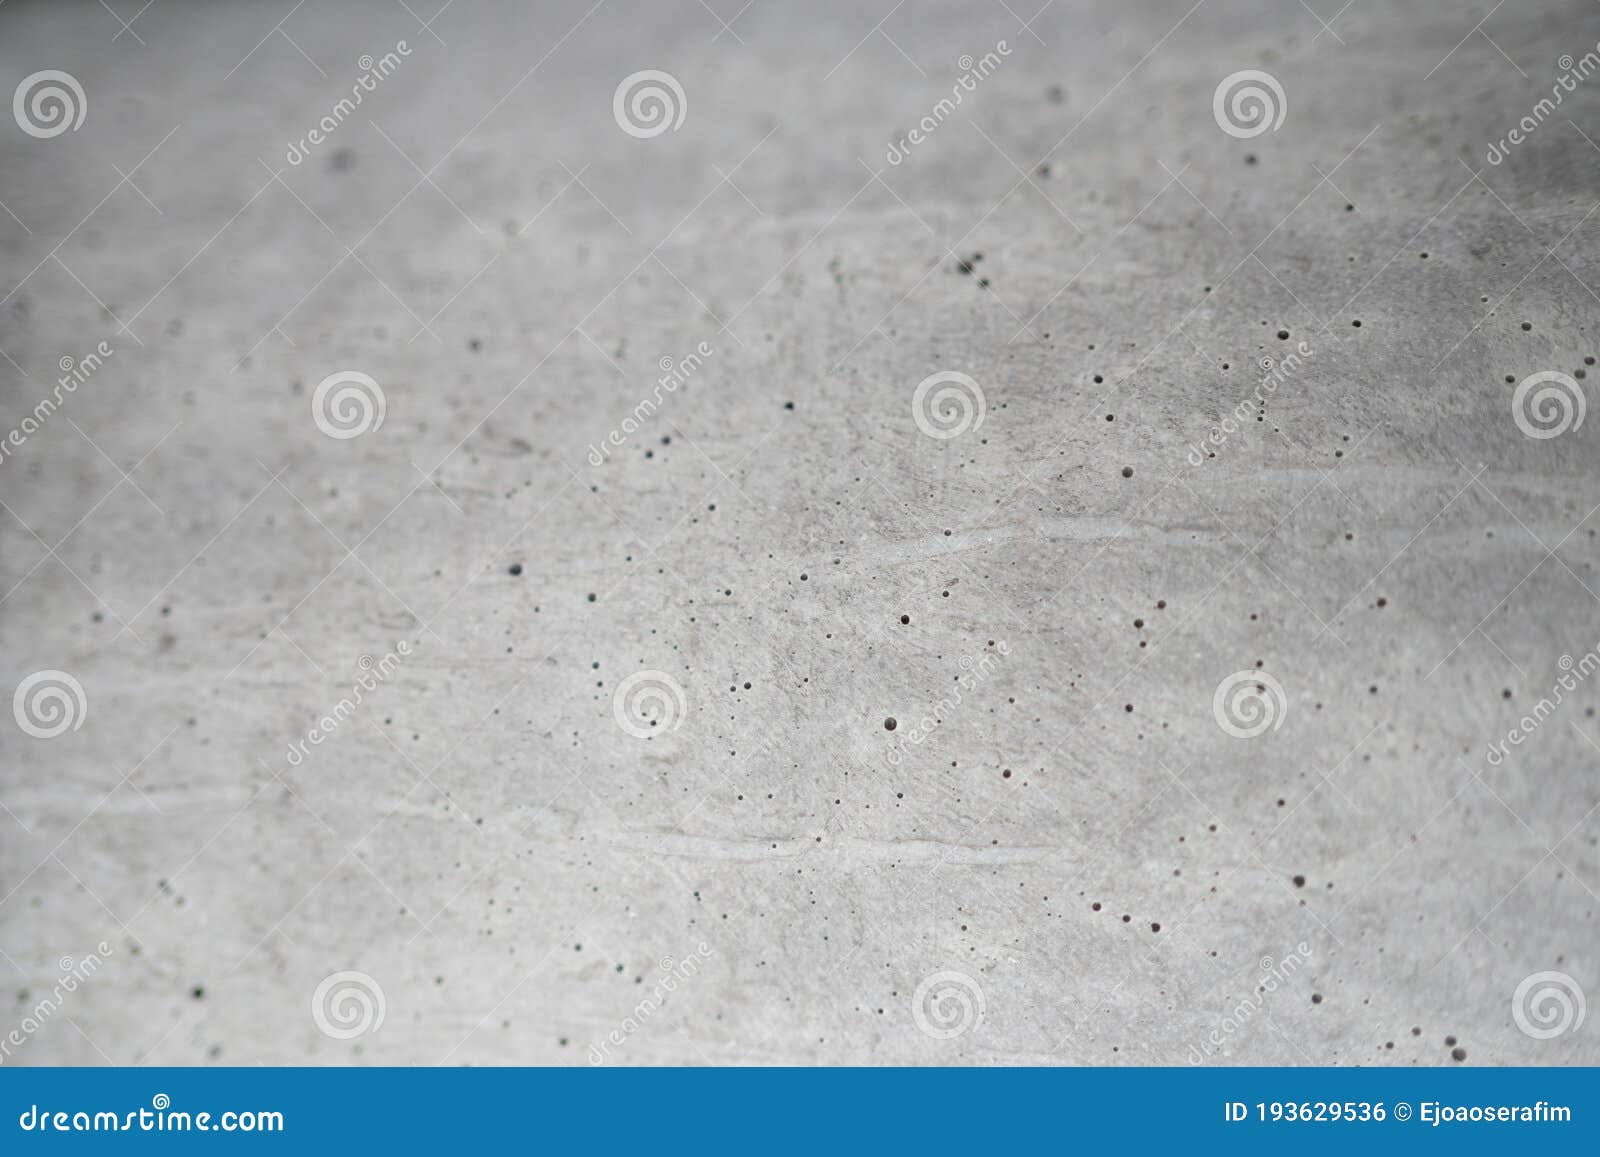 raw beton brut grunge concrete wall or floor texture.